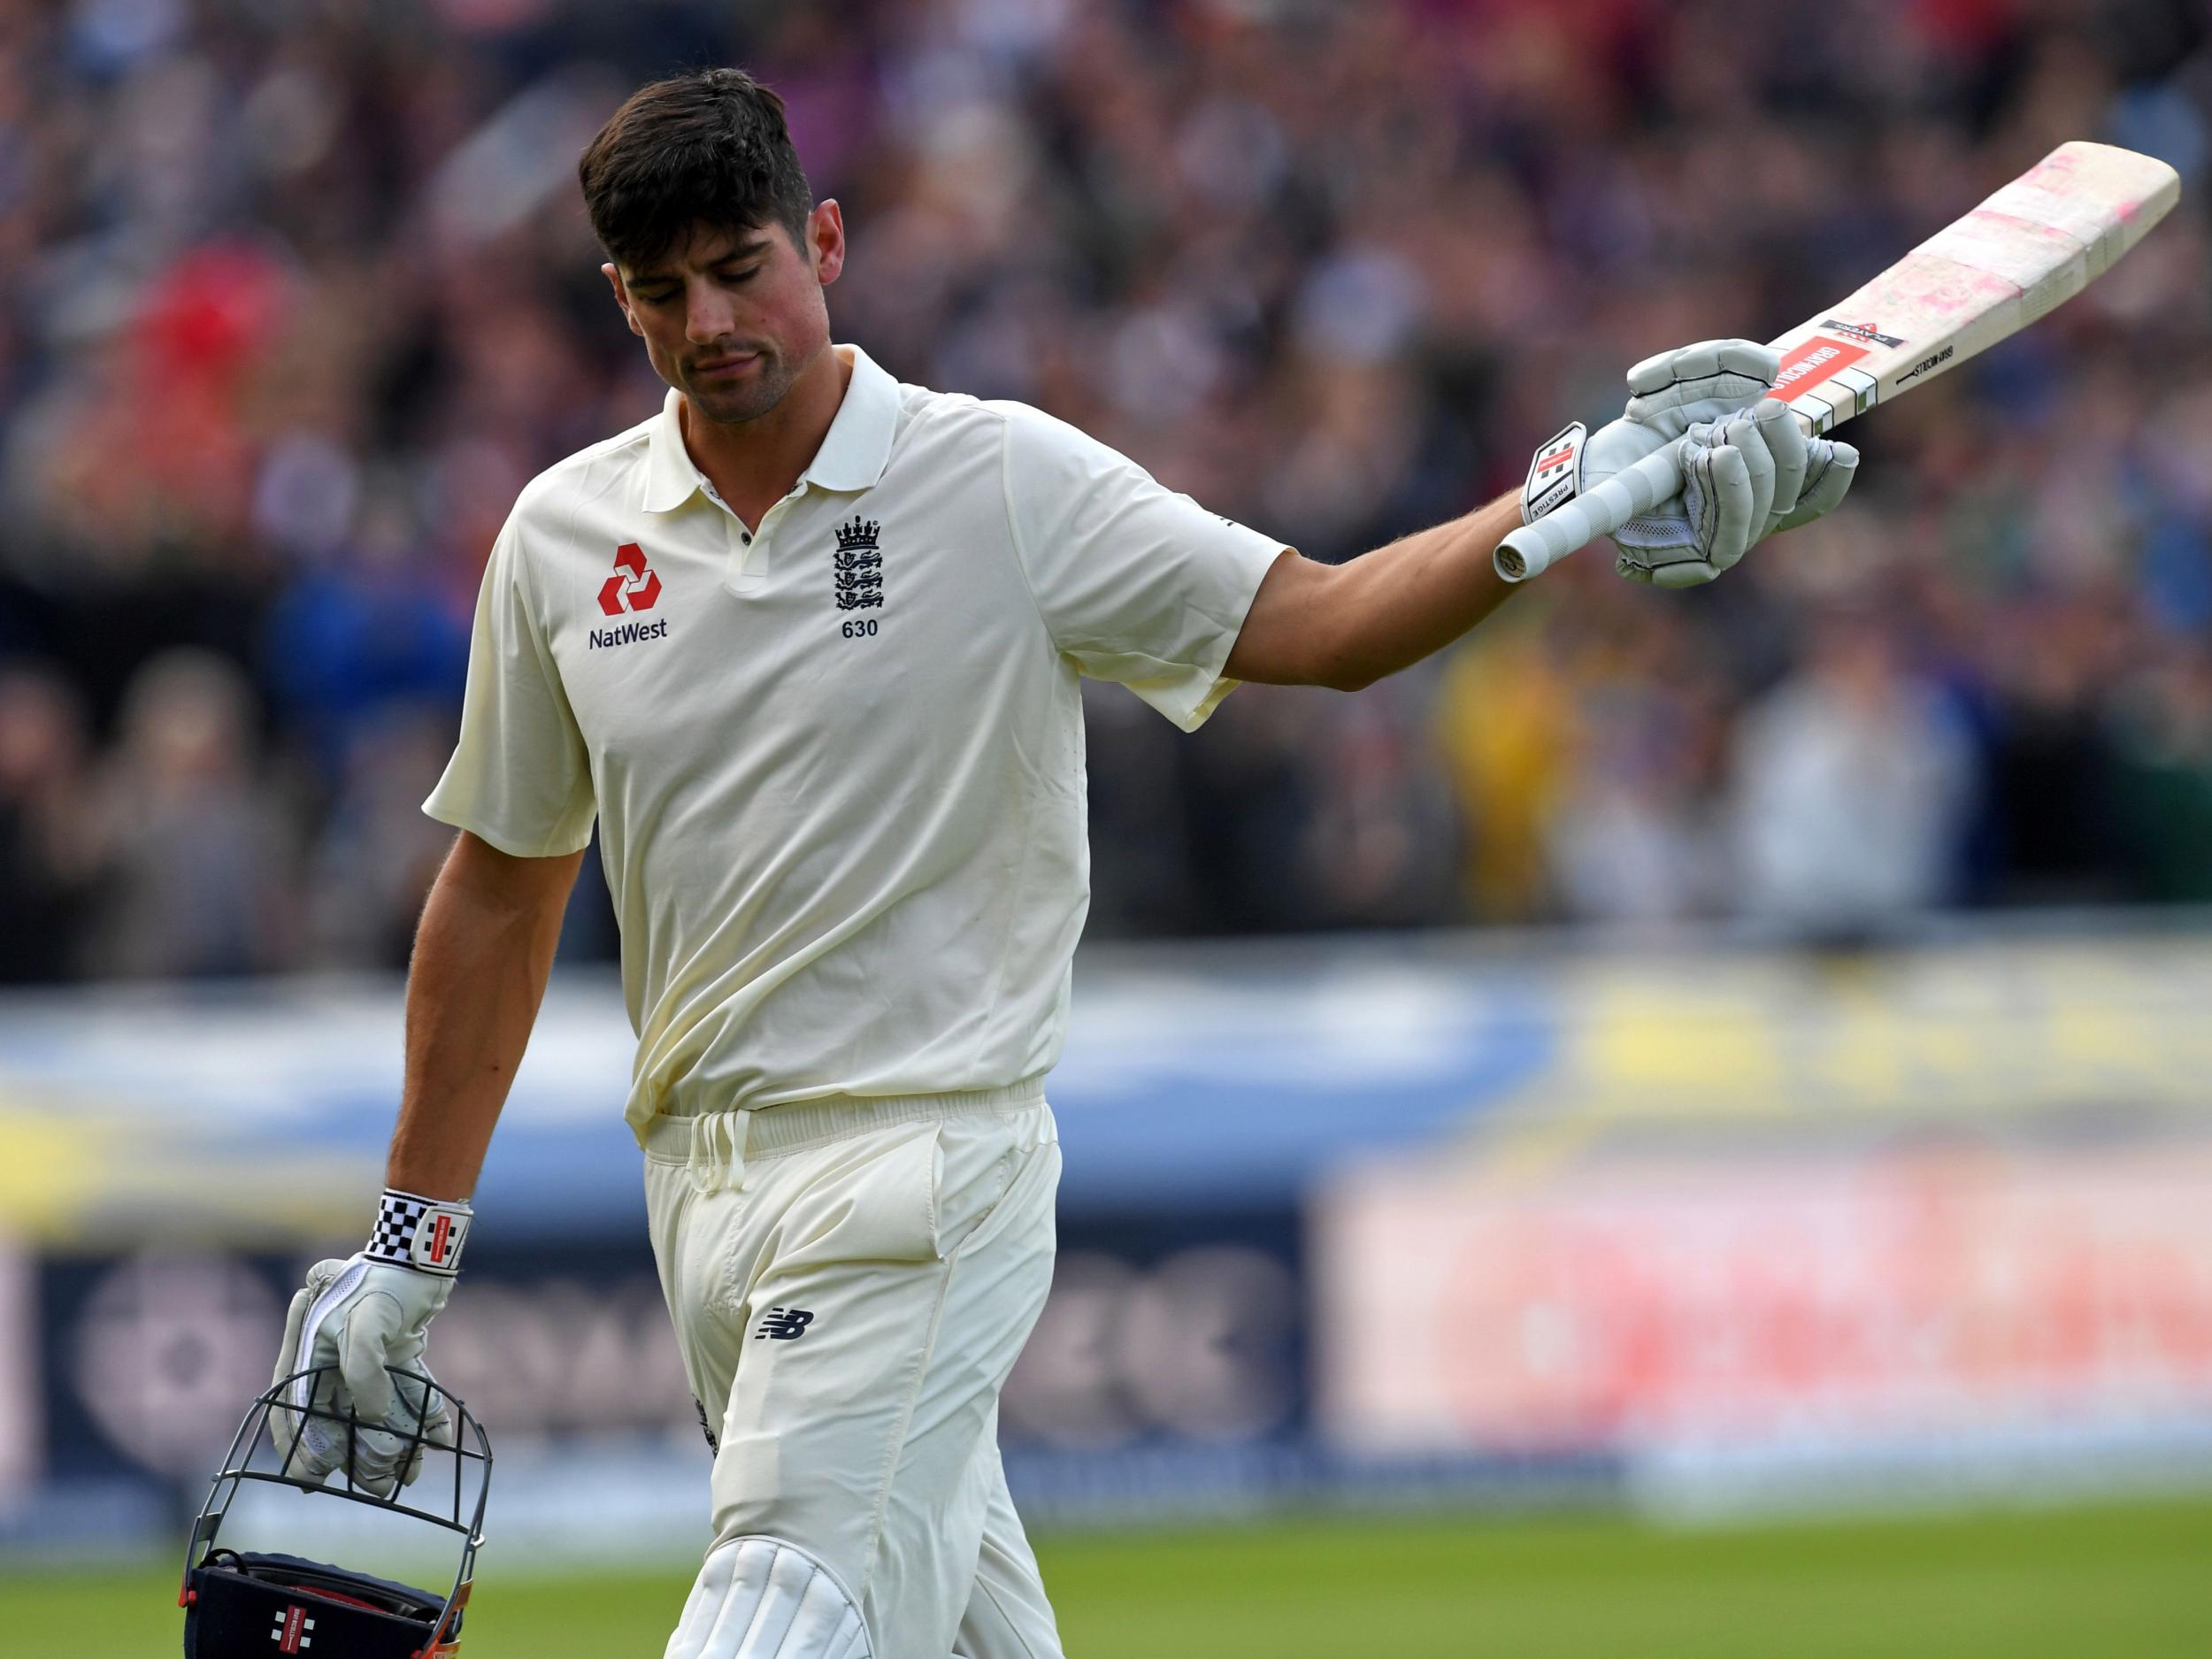 England declared upon Cook's dismissal